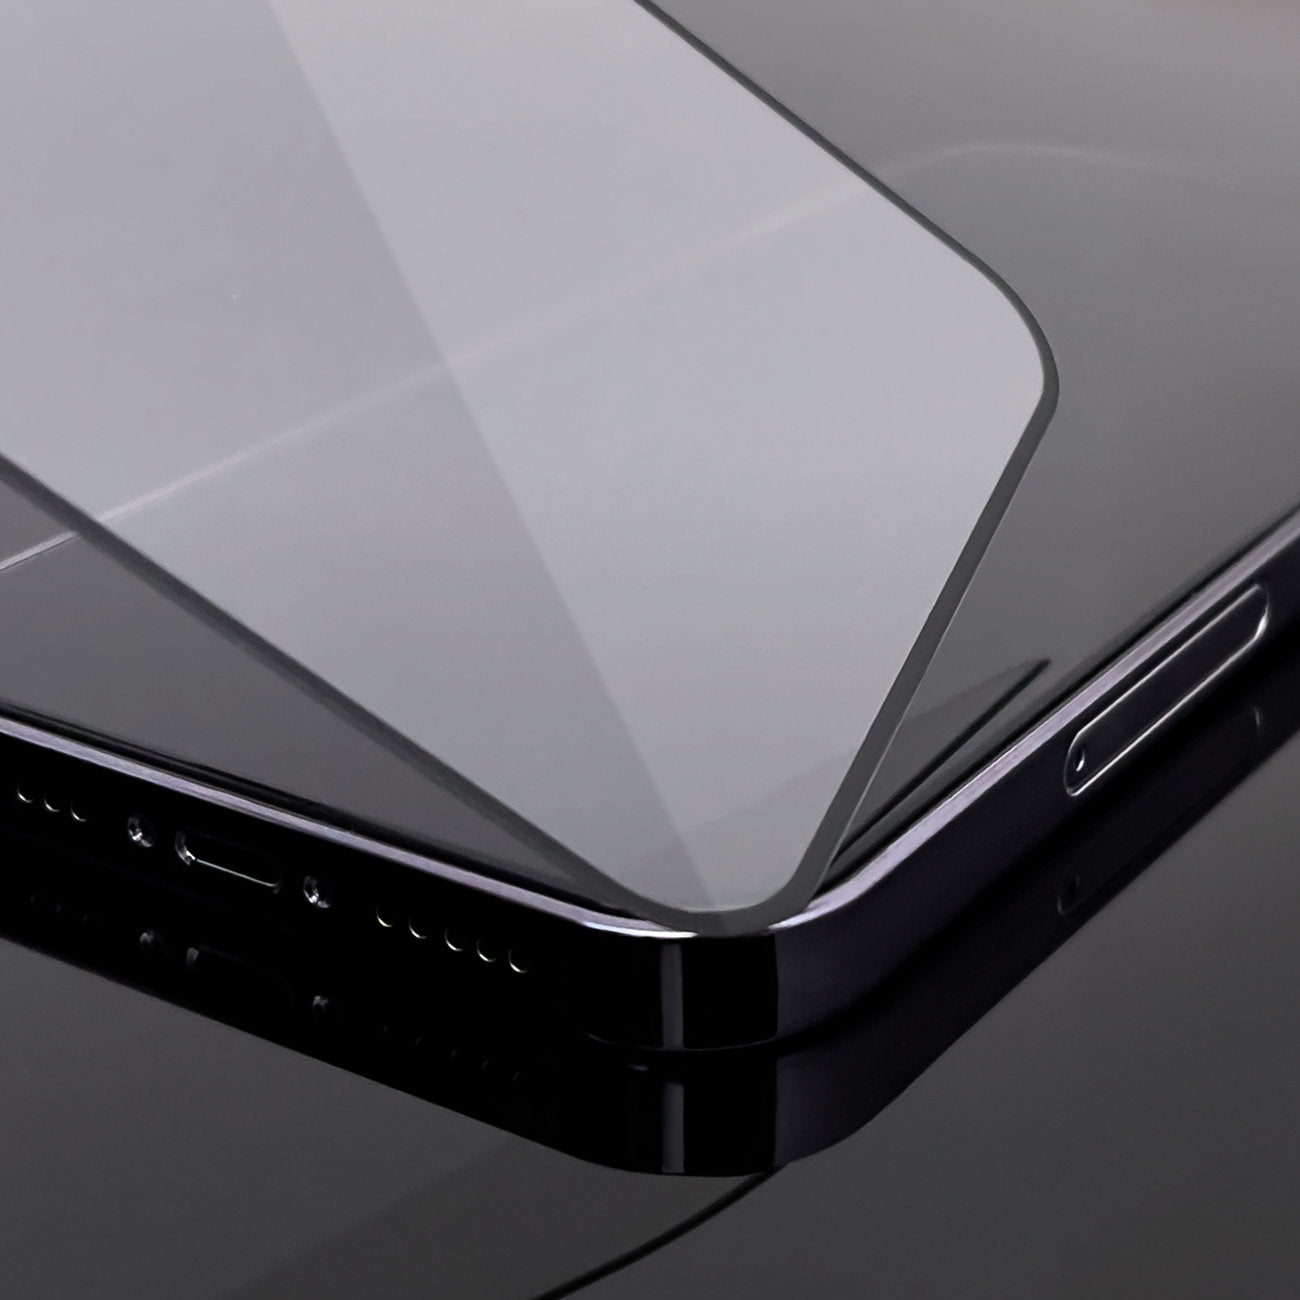 Wozinsky Full Glue tempered glass Motorola Moto E22i / E22 full screen with frame black (case friendly)